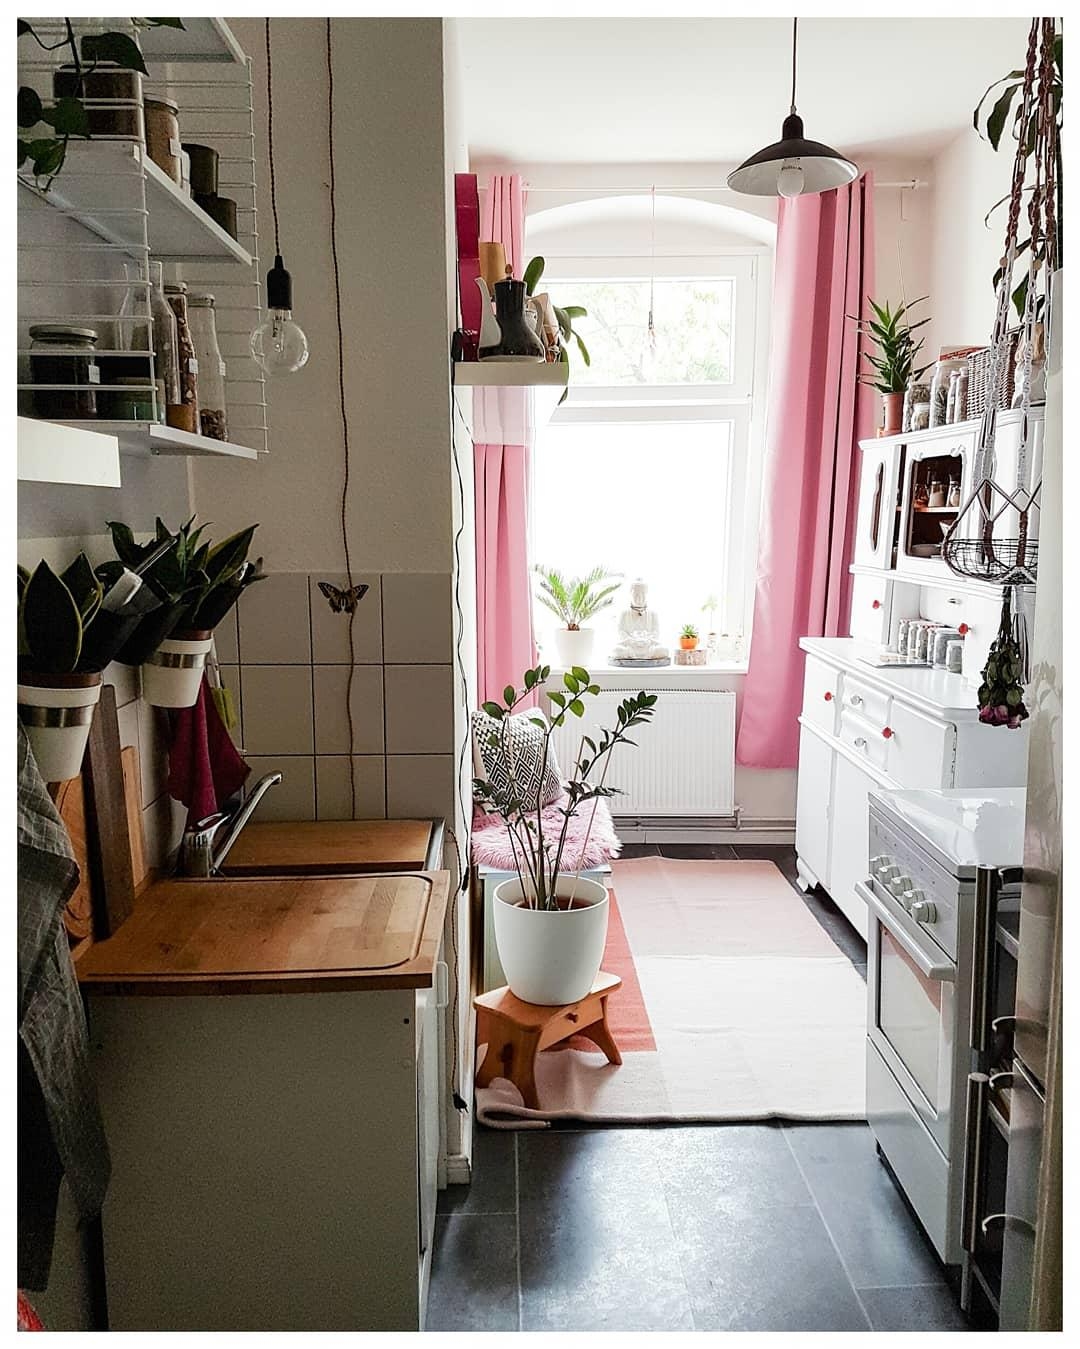 #kitchen #kitchendesign #vintagehome #vintagelove